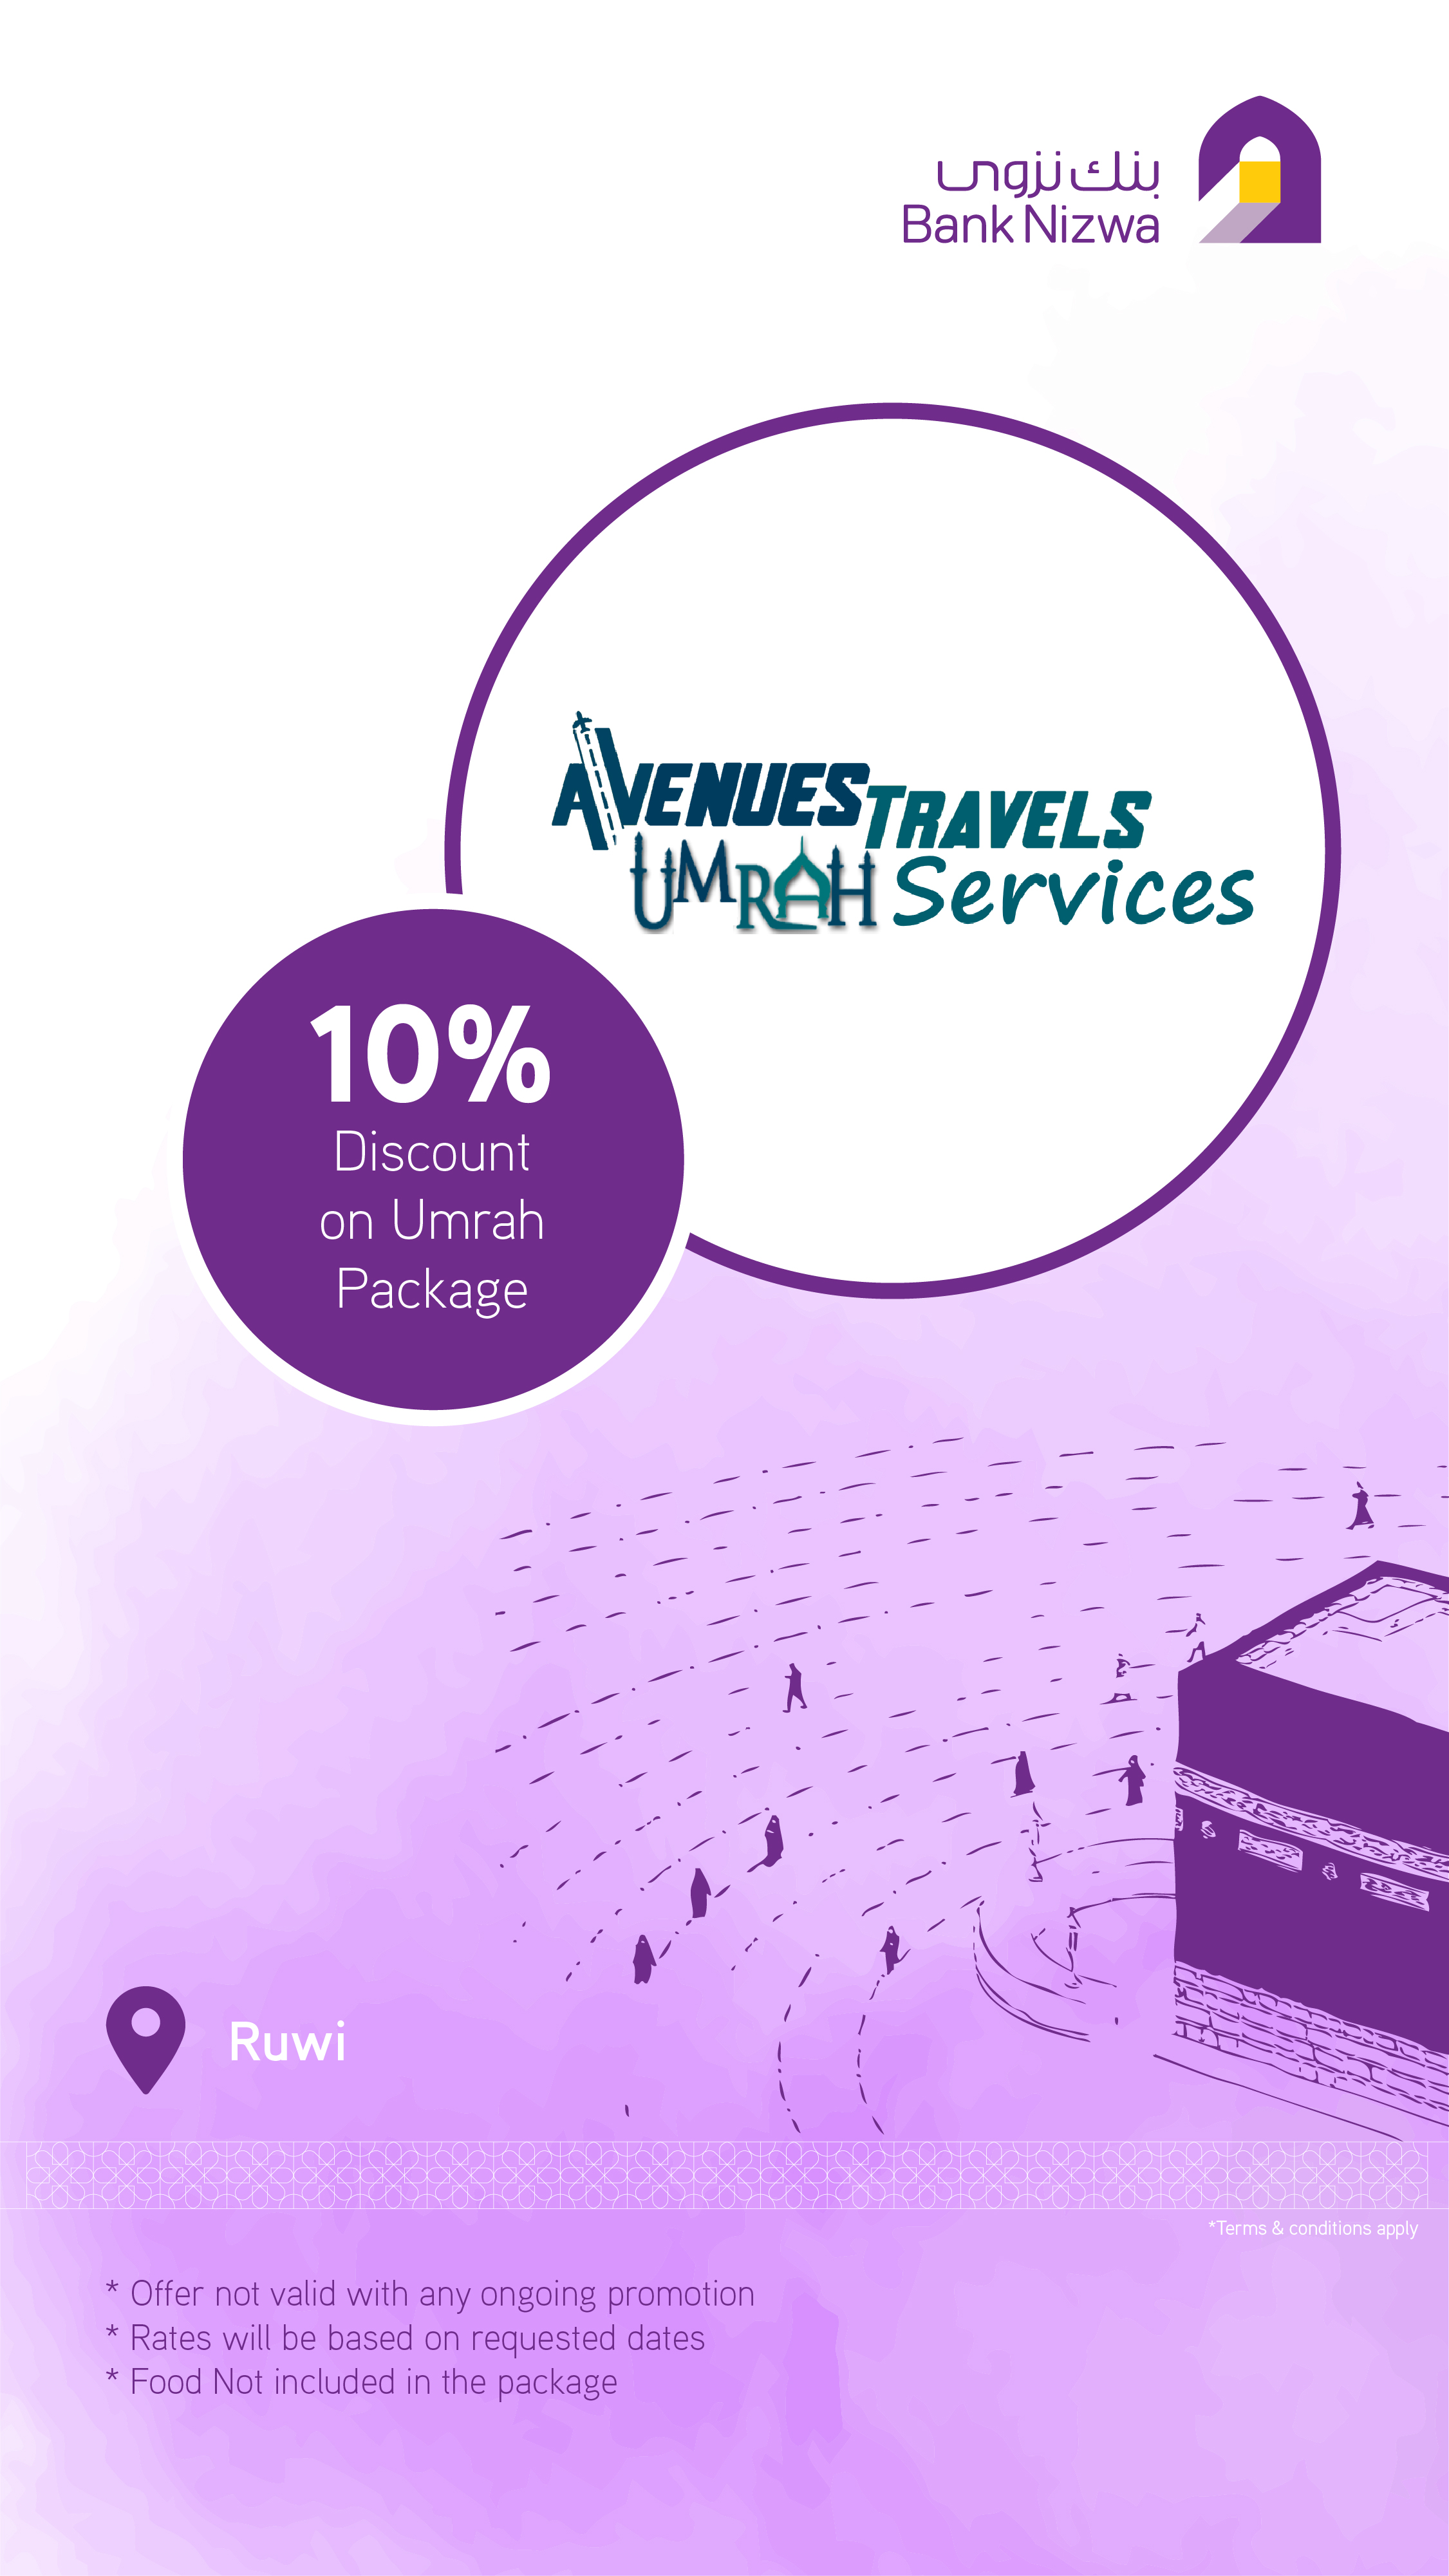 Avenues Travels Umrah Services